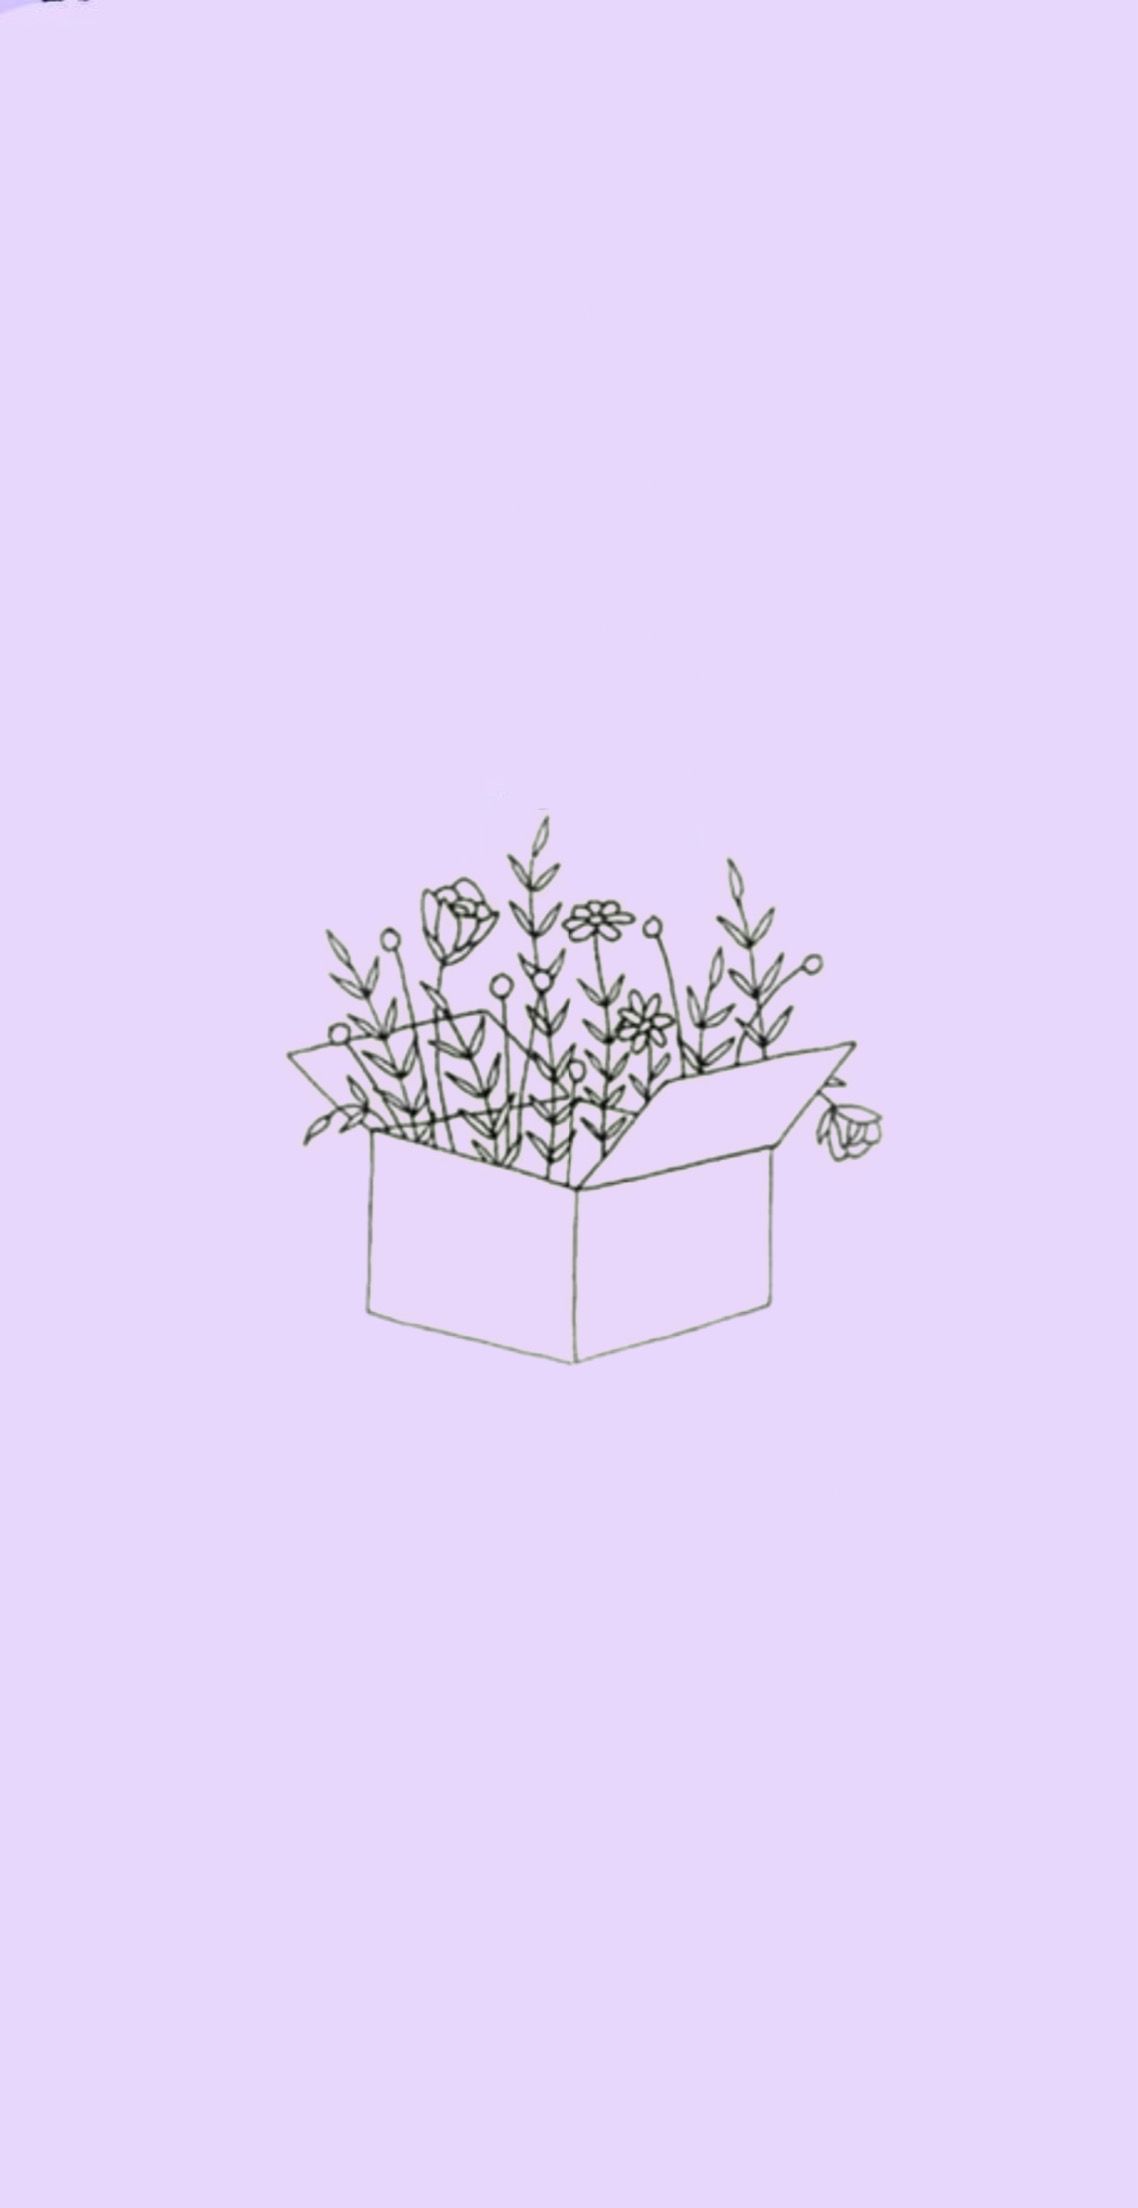 A box of flowers on purple background - Pastel purple